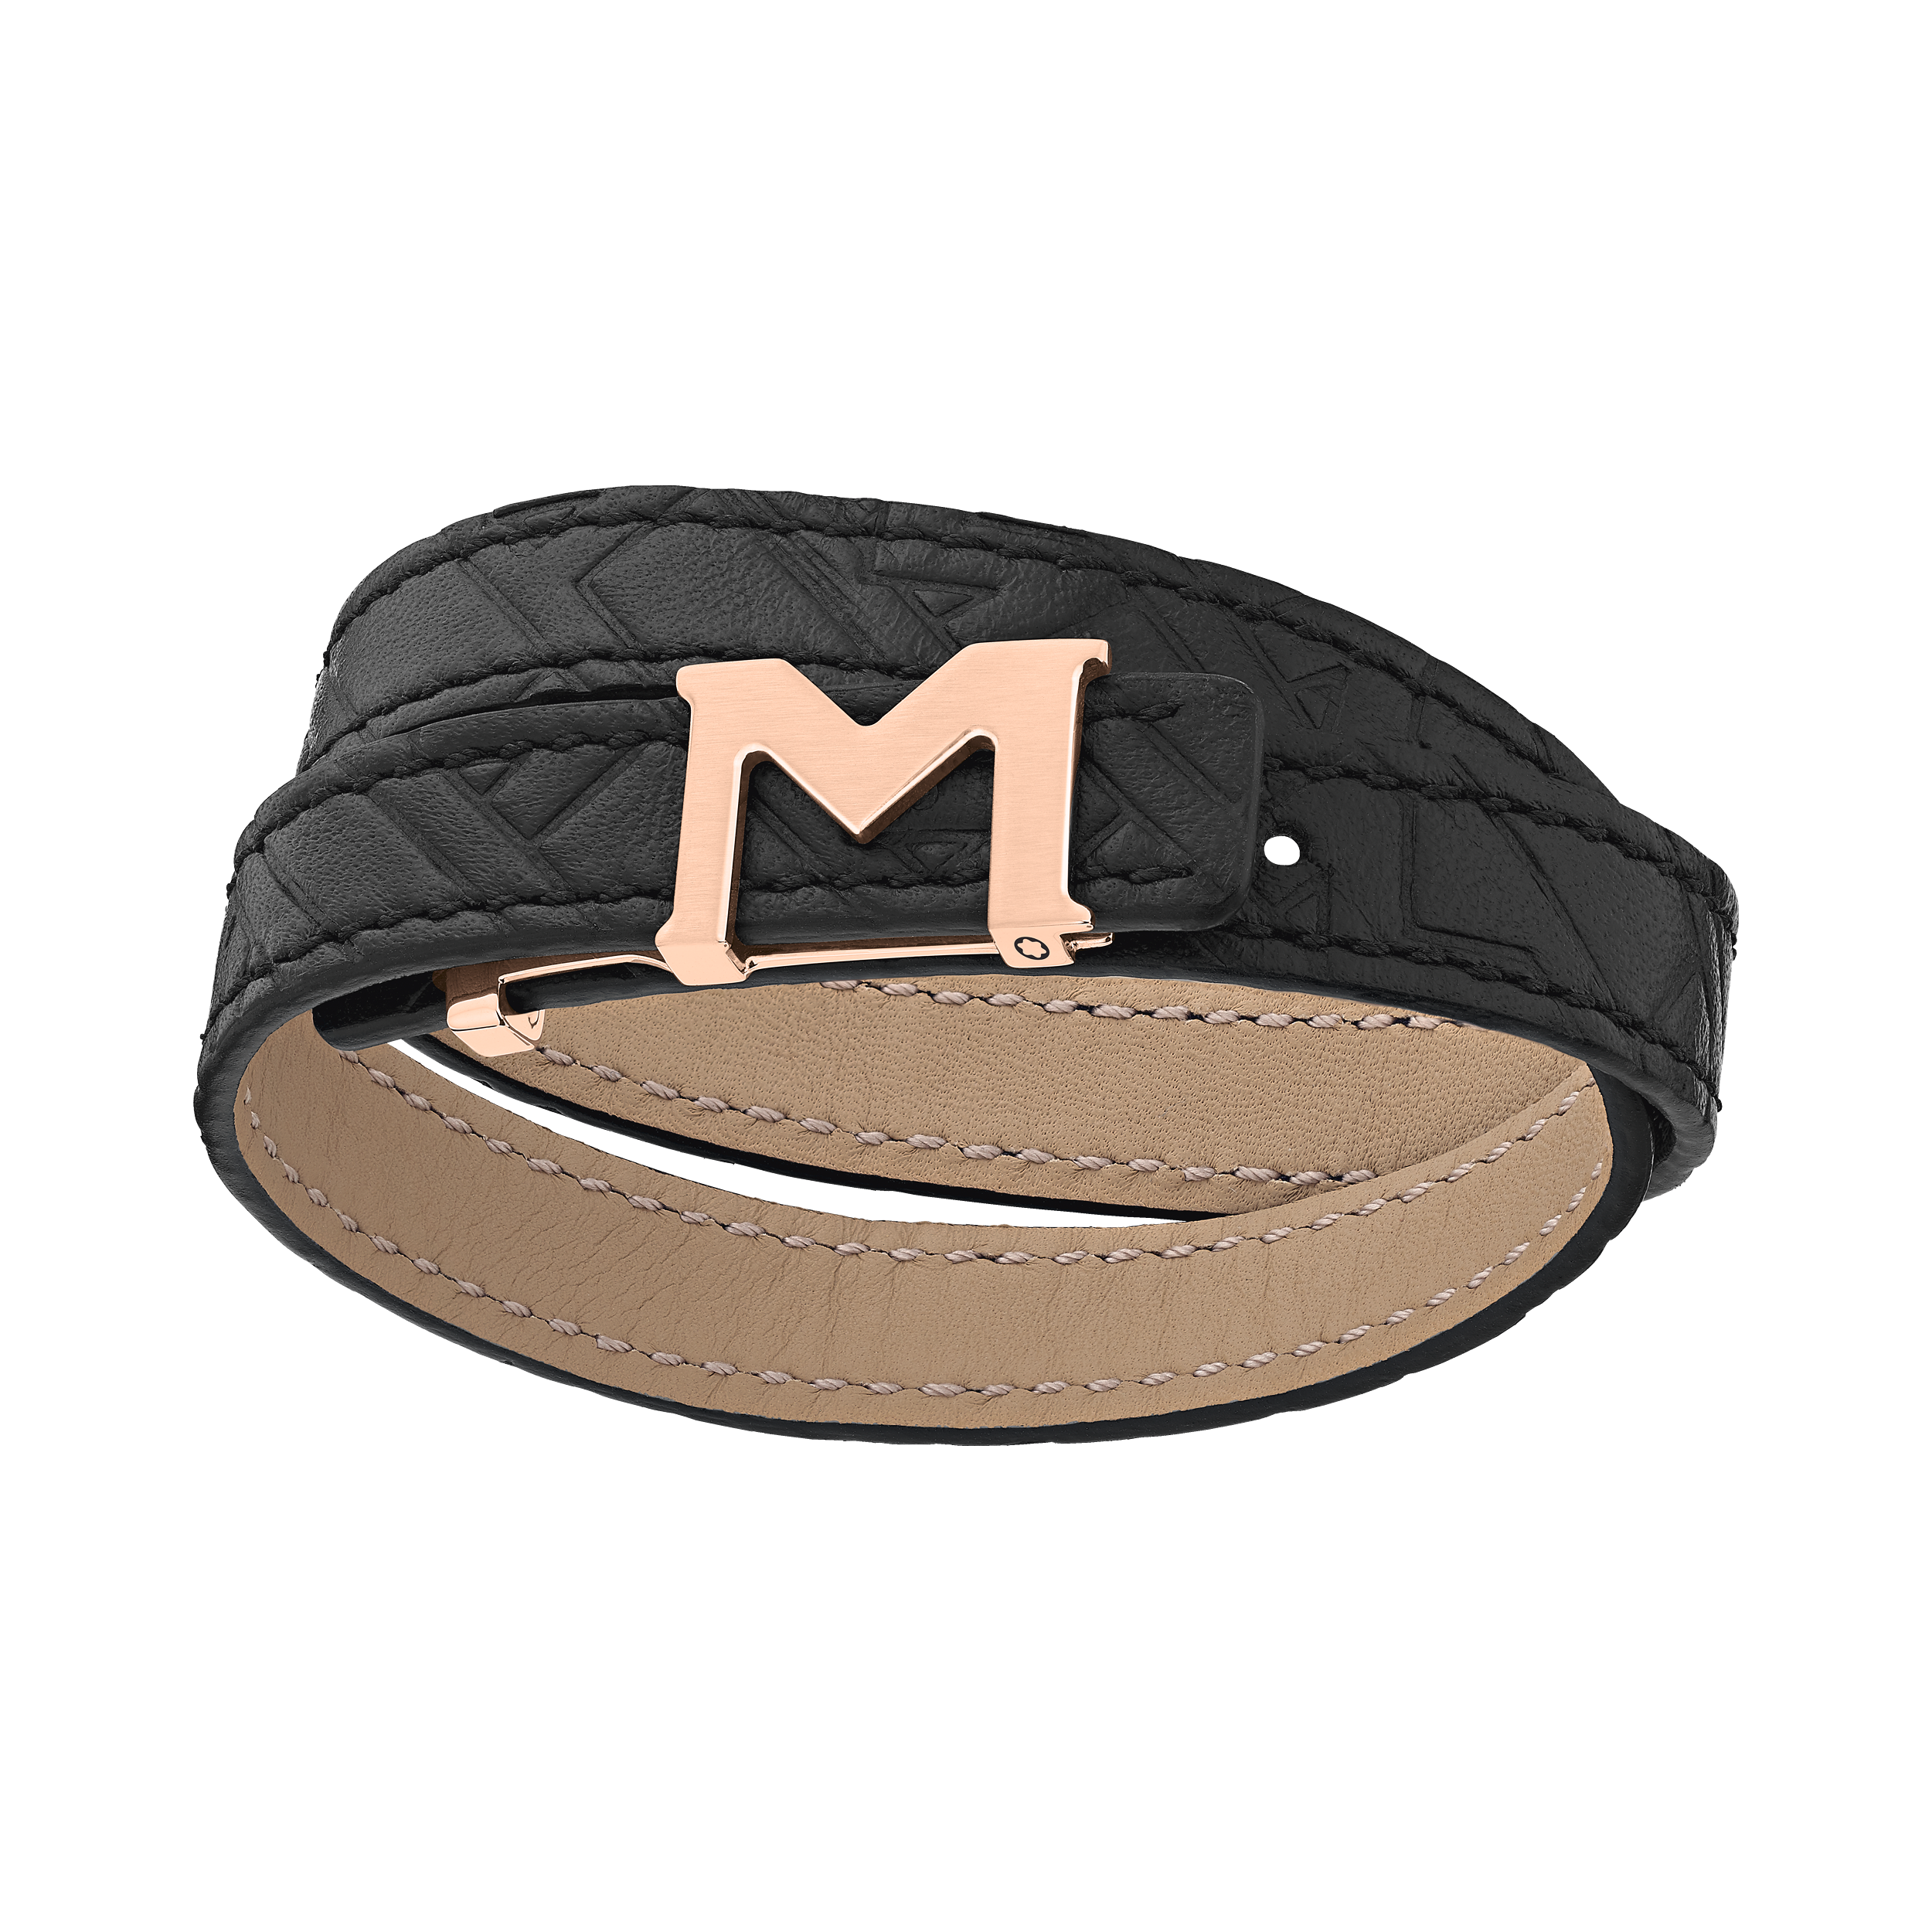 Montblanc M Logo Bracelet, Embossed Black Band with Rose Gold-Coated Closure, image 1